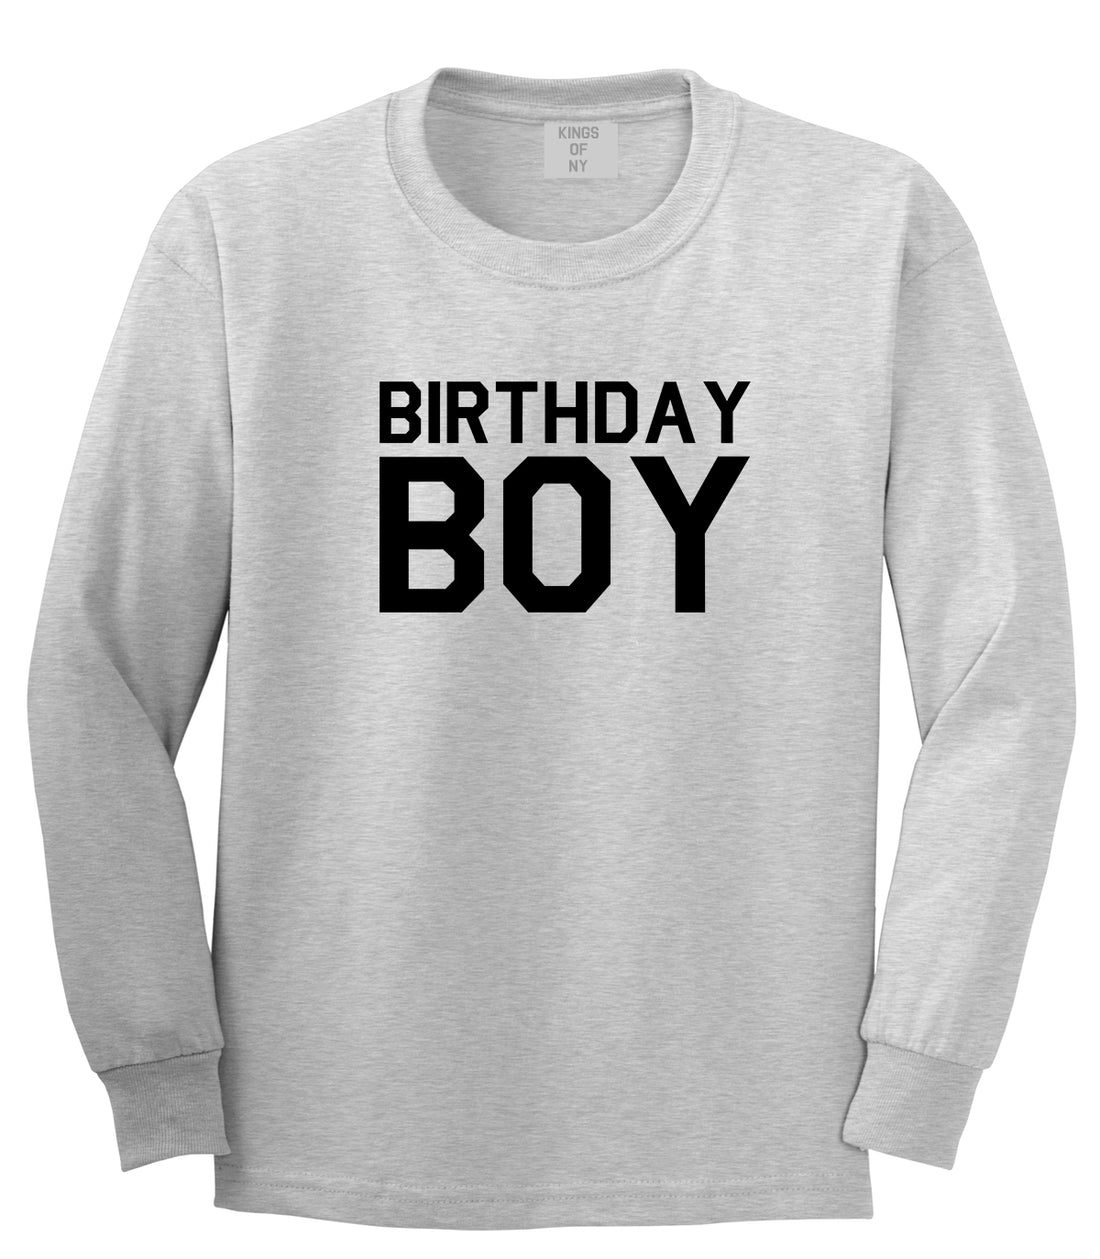 Birthday Boy Grey Long Sleeve T-Shirt by Kings Of NY